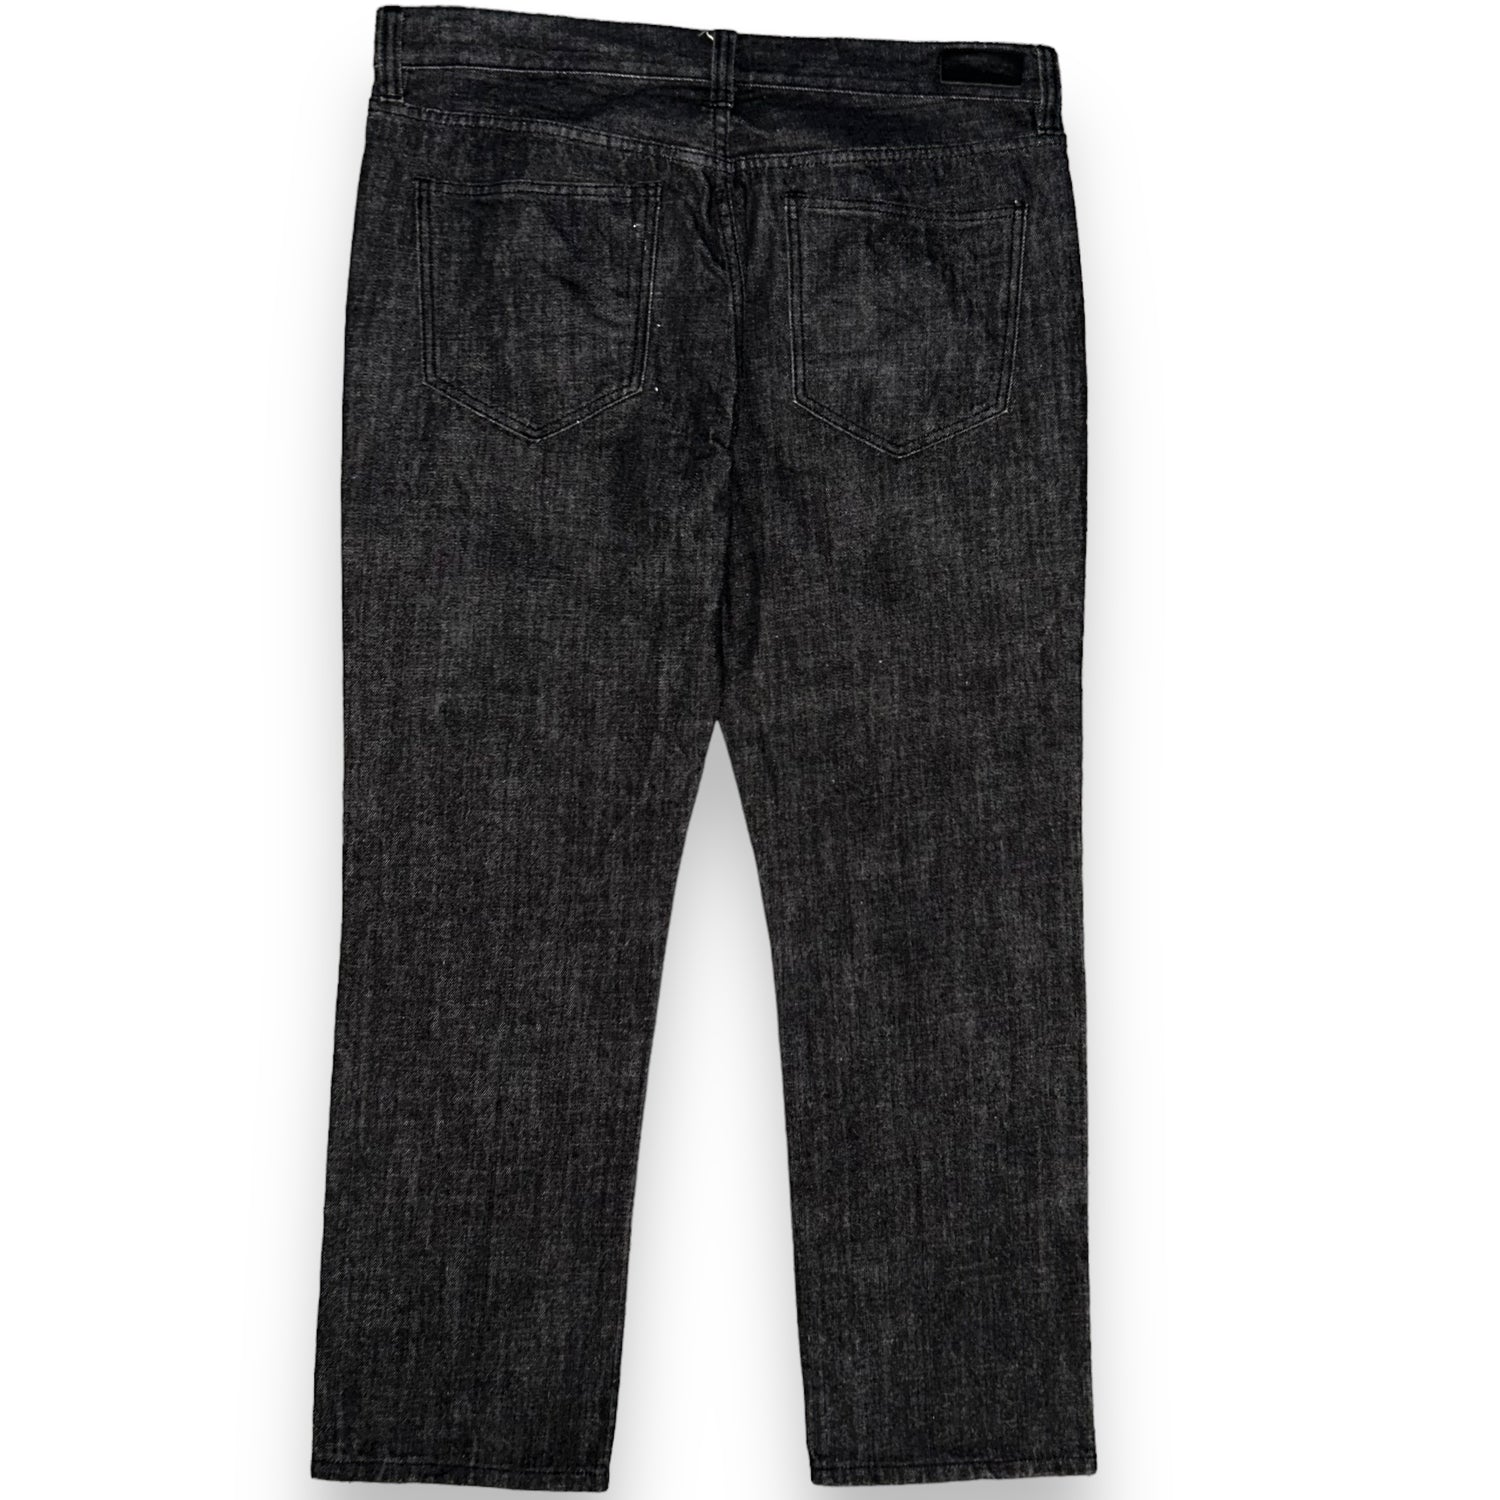 Jeans Ecko Unlimited Vintage  (36 USA  XL)